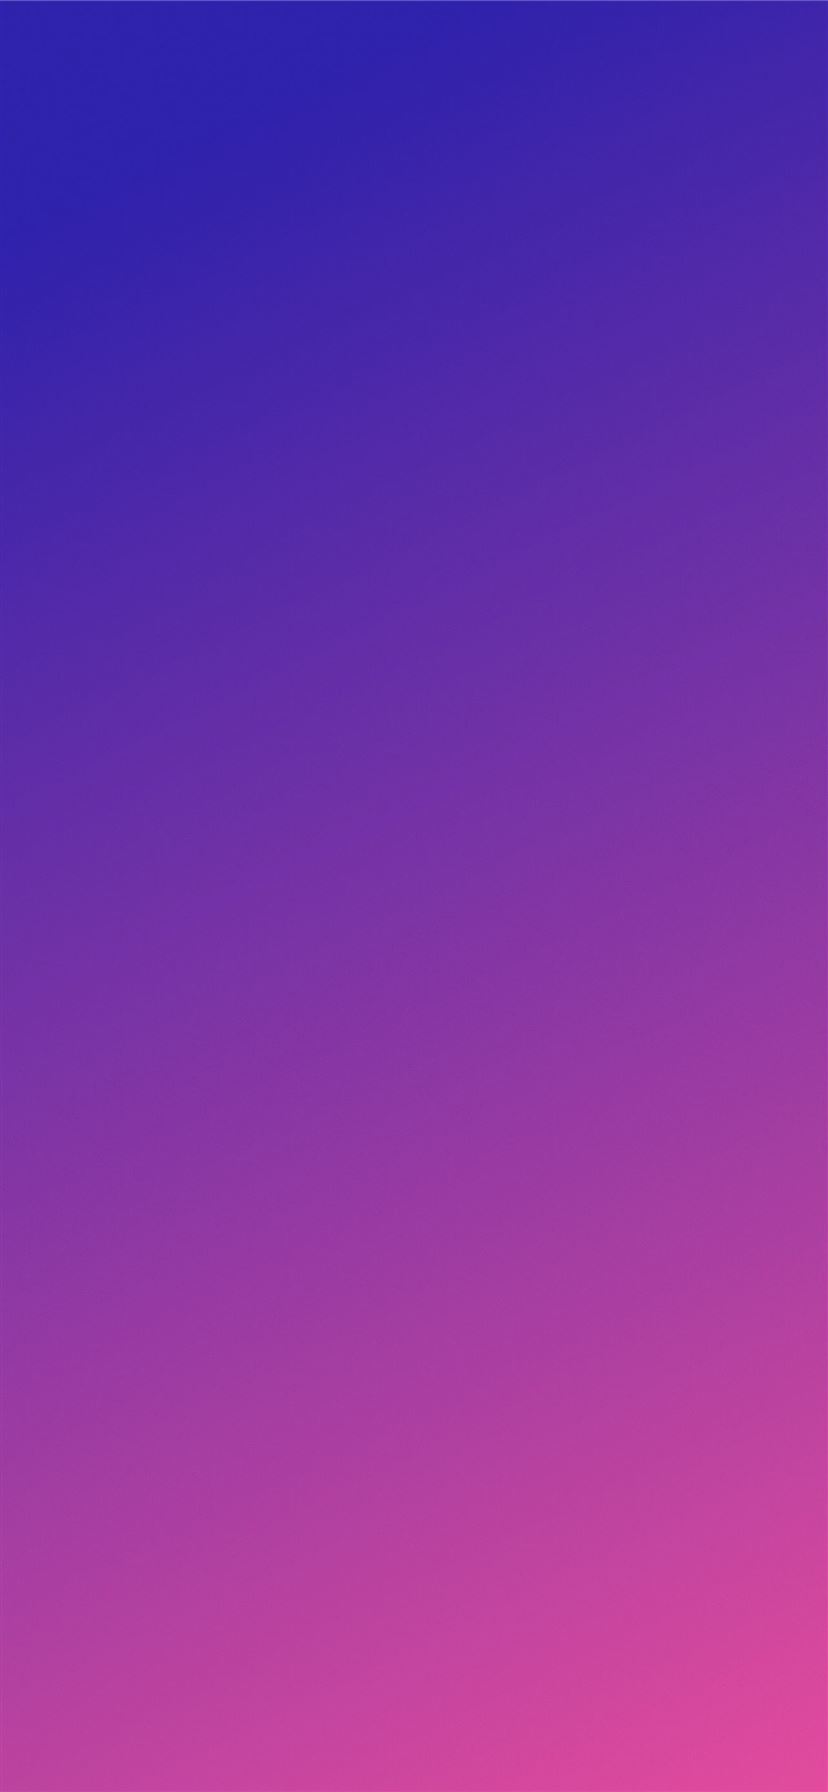 Dark Blue To Purple Gradient iPhone Wallpaper